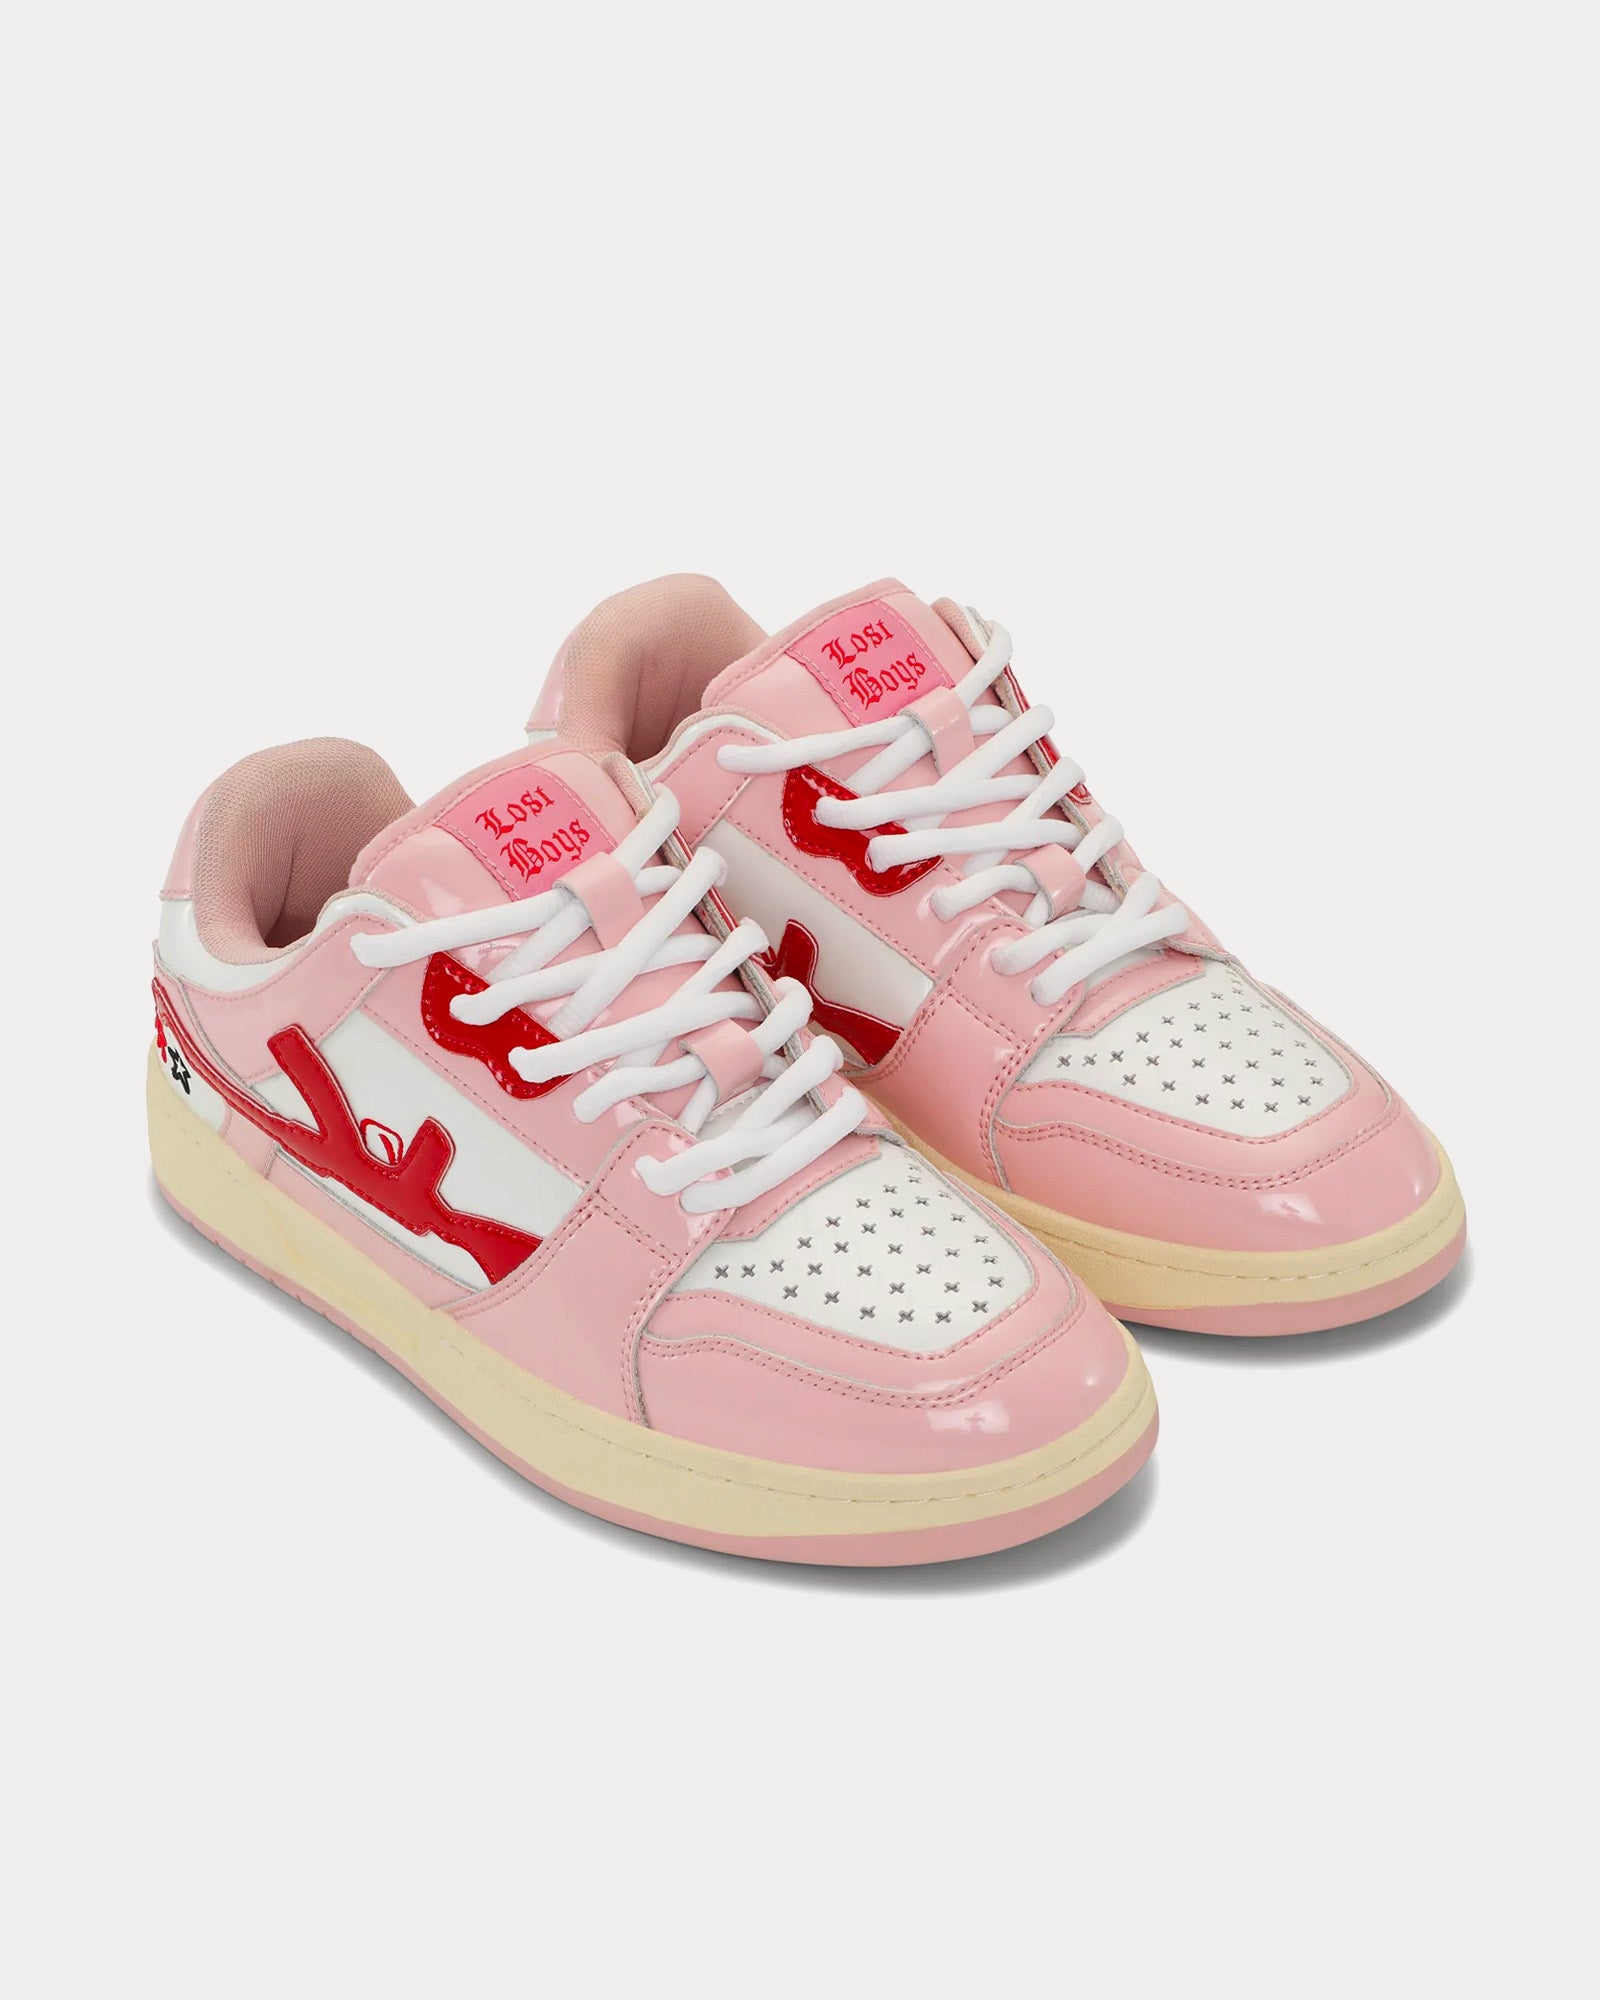 Lost Boys - Feelin' Peachy Pink / White Low Top Sneakers